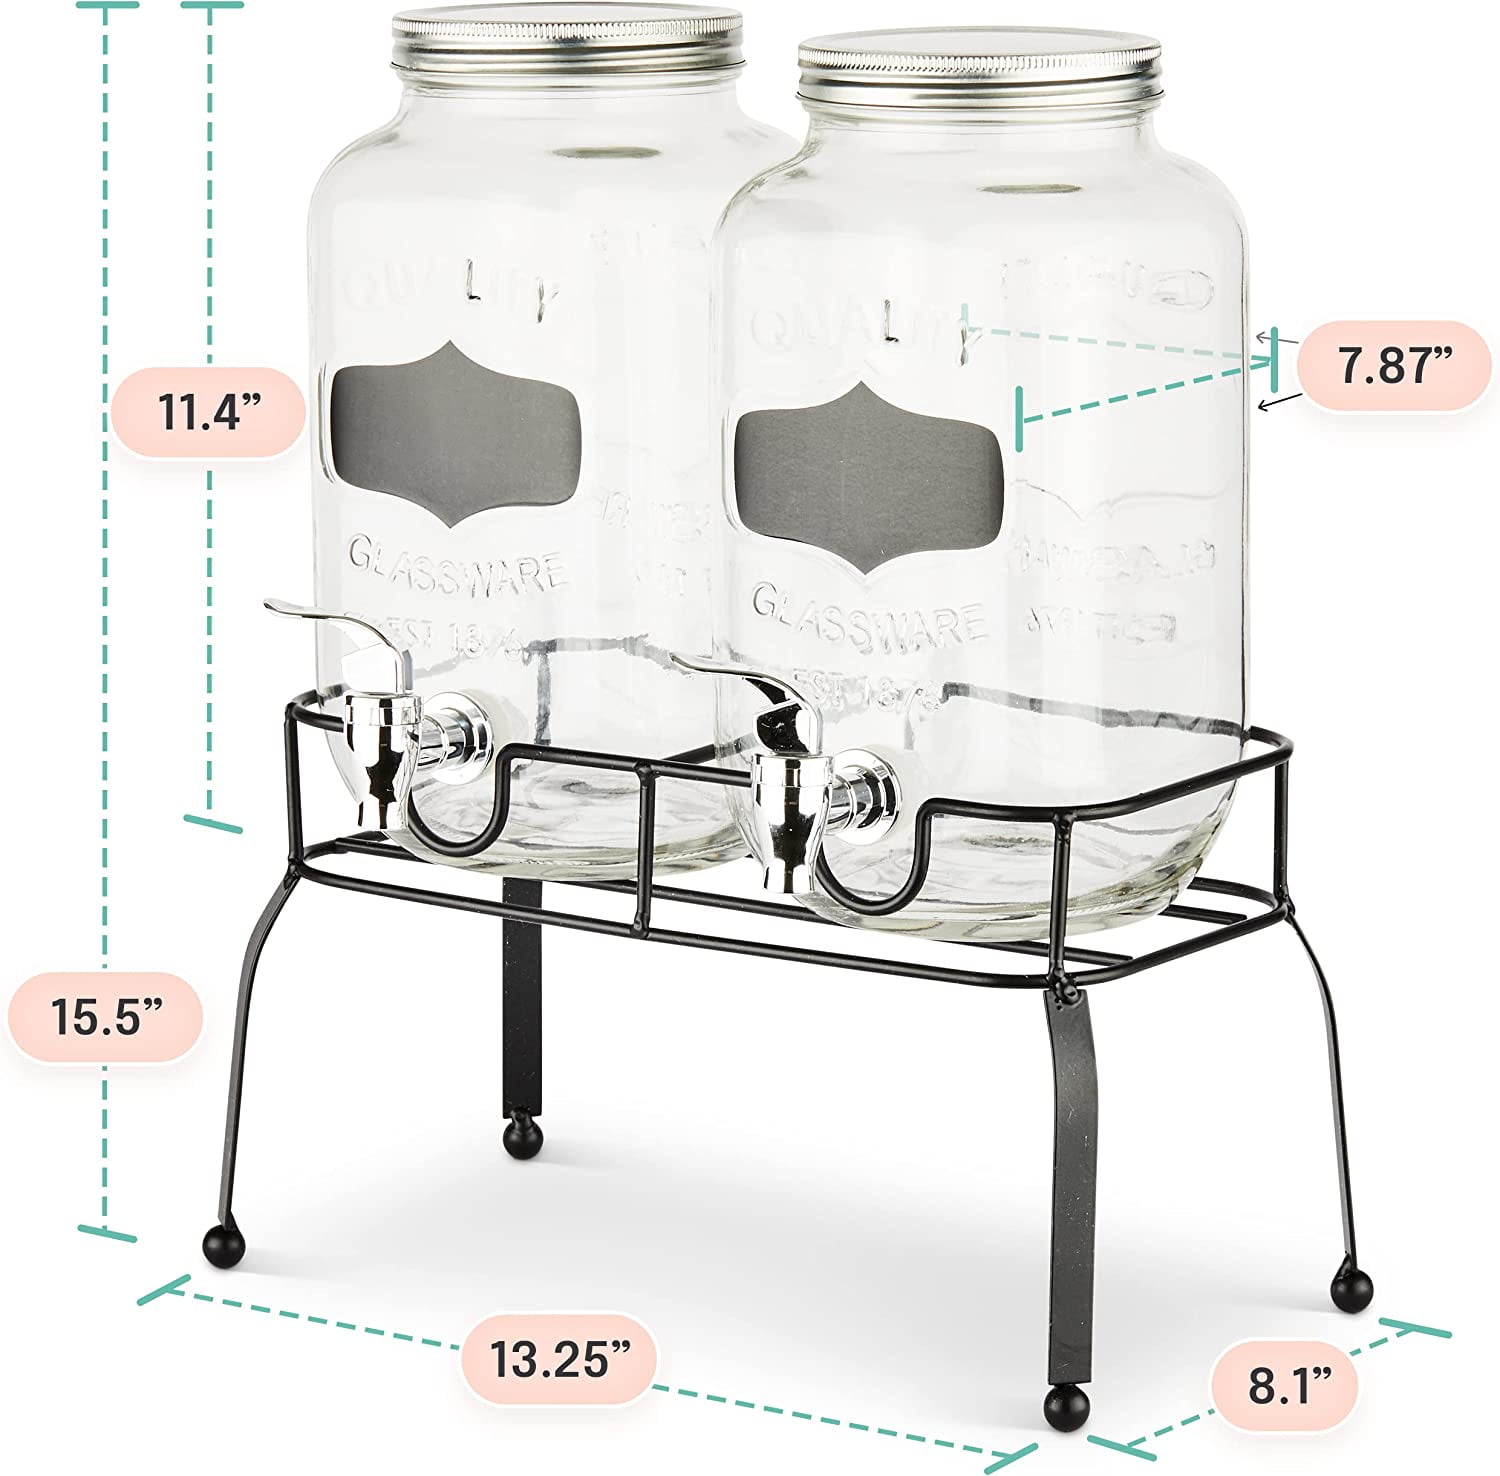 Estilo 1 gallon Glass Mason Jar Double Beverage Drink Dispenser On Metal Stand With Leak Free Spigot 2 Set Doubled Jar- Clear 